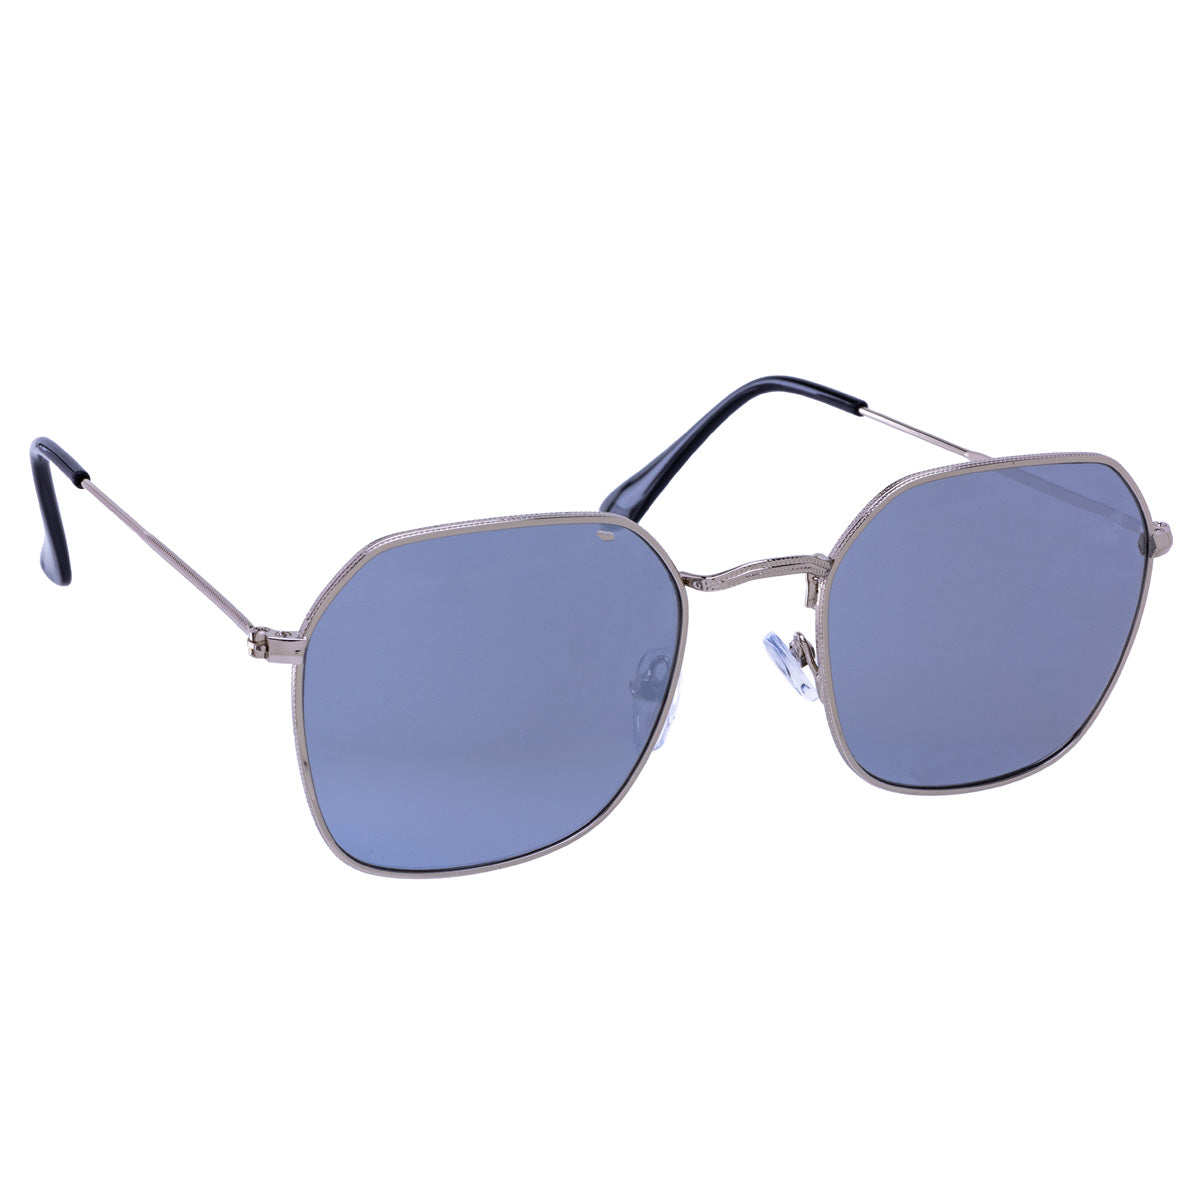 Angled sunglasses with metal frames